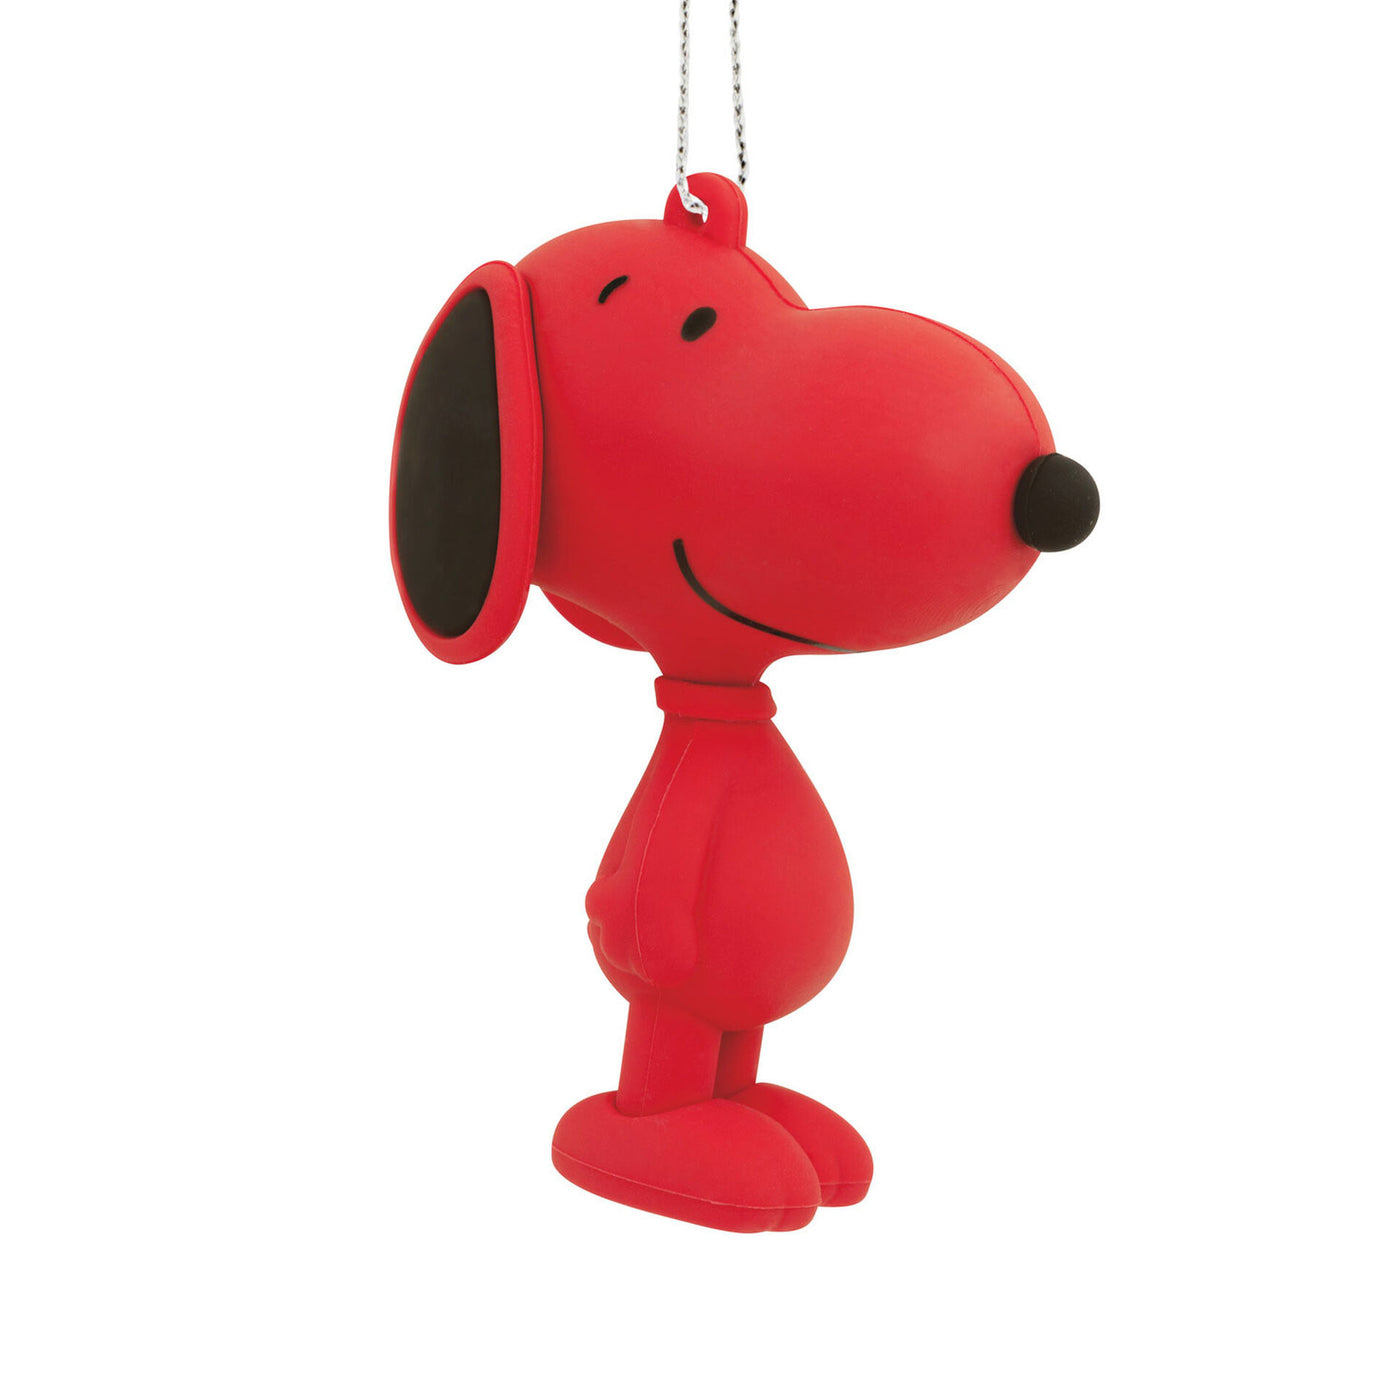 Hallmark Peanuts Snoopy Rainbow Red Ornament New with Tag